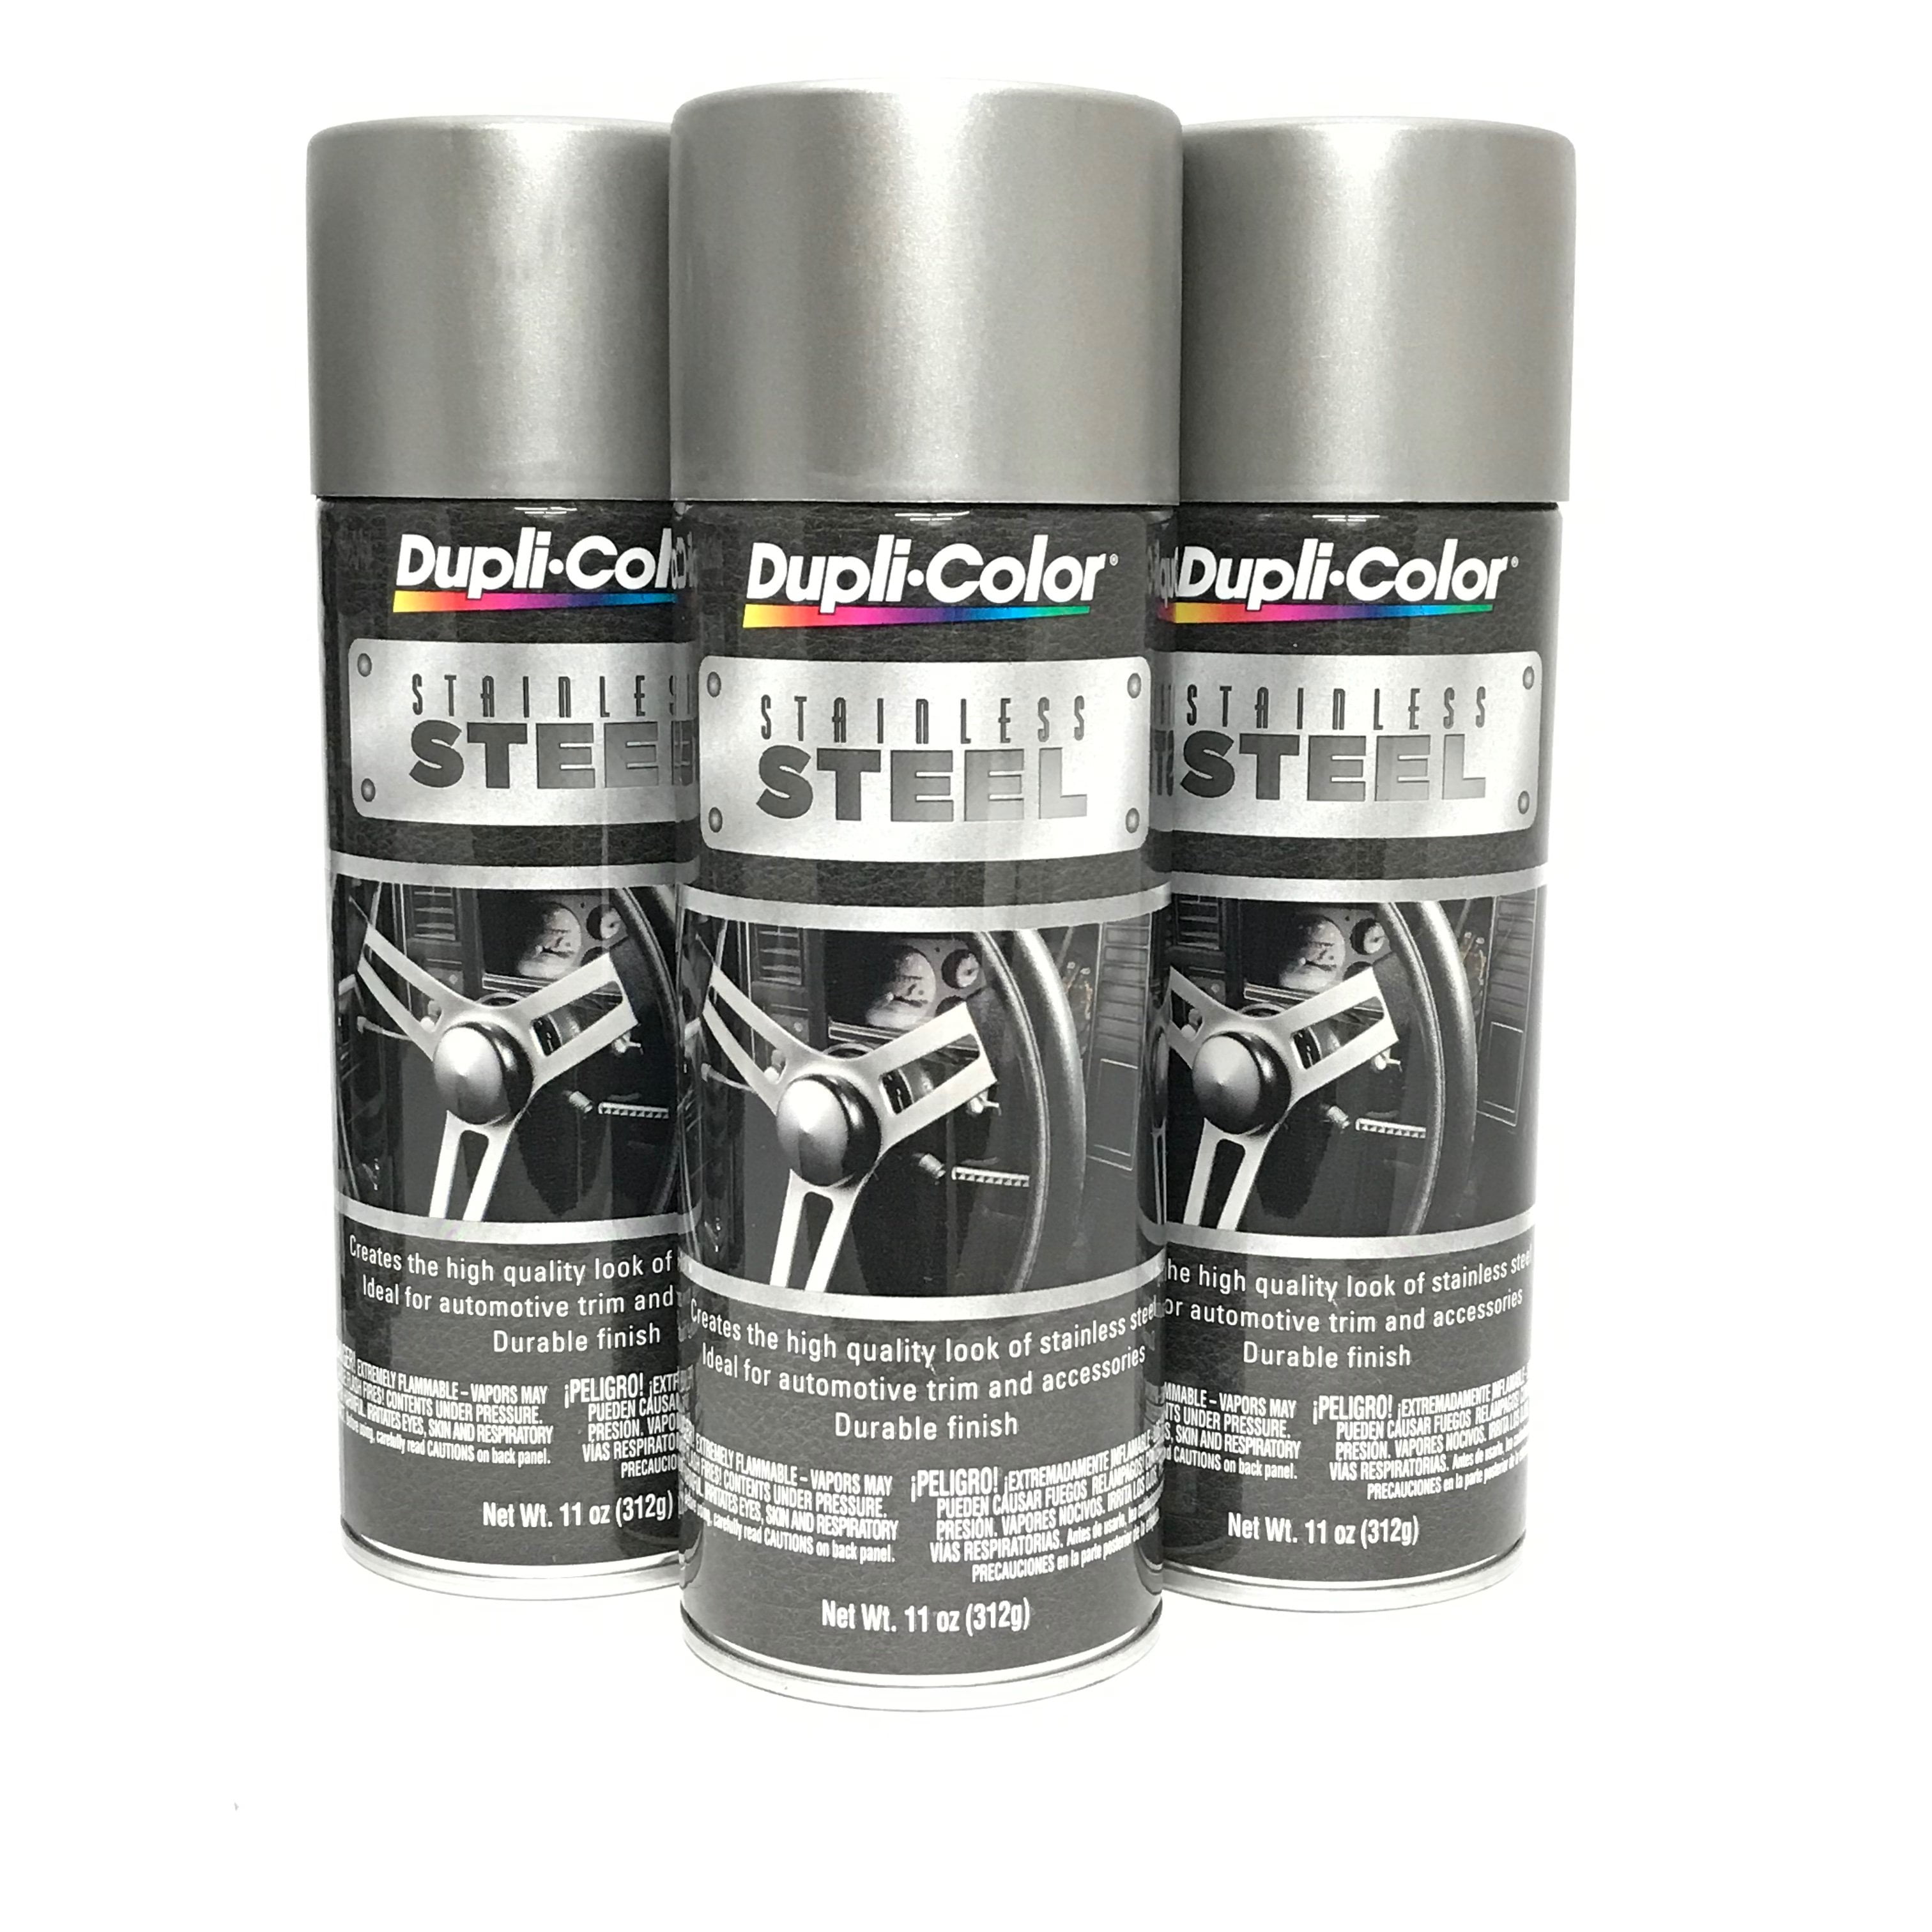 Rust-Oleum Acrylic Enamel 2X Spray Paint - Gloss Clear (12 oz.) 271913 -  Advance Auto Parts